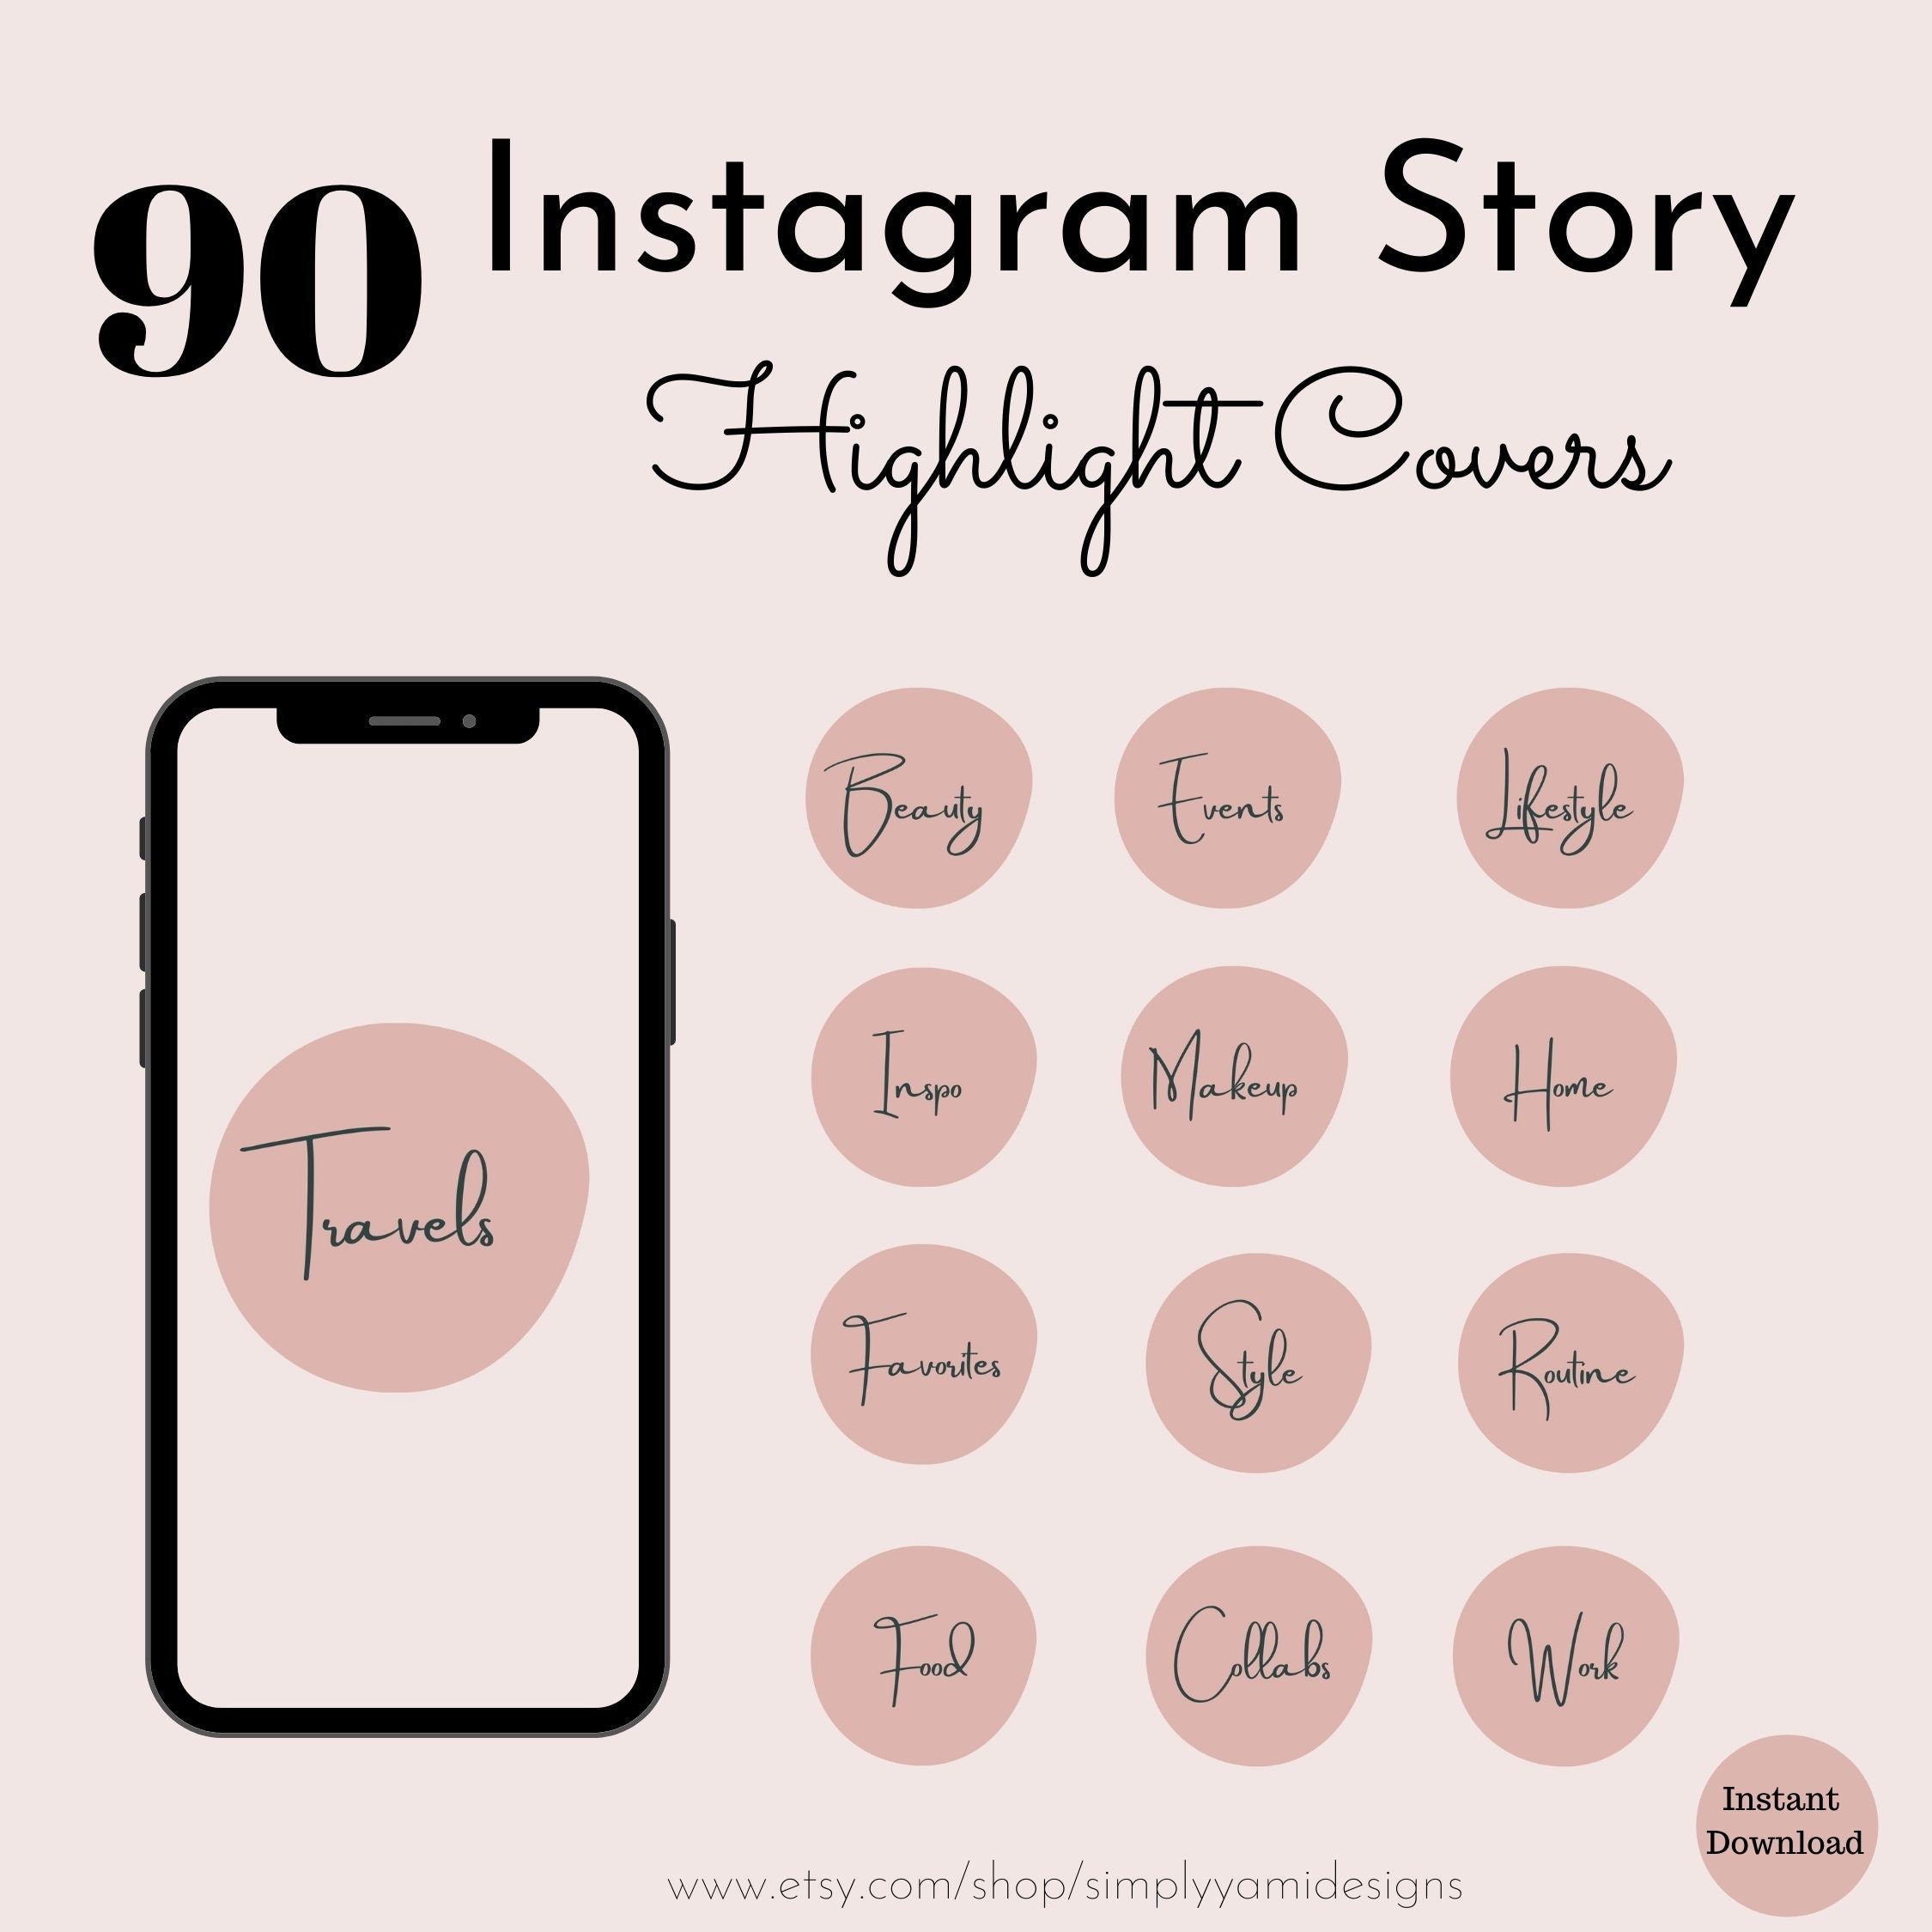 90 Instagram Story Highlight Covers Neutraltext Instagram - Etsy